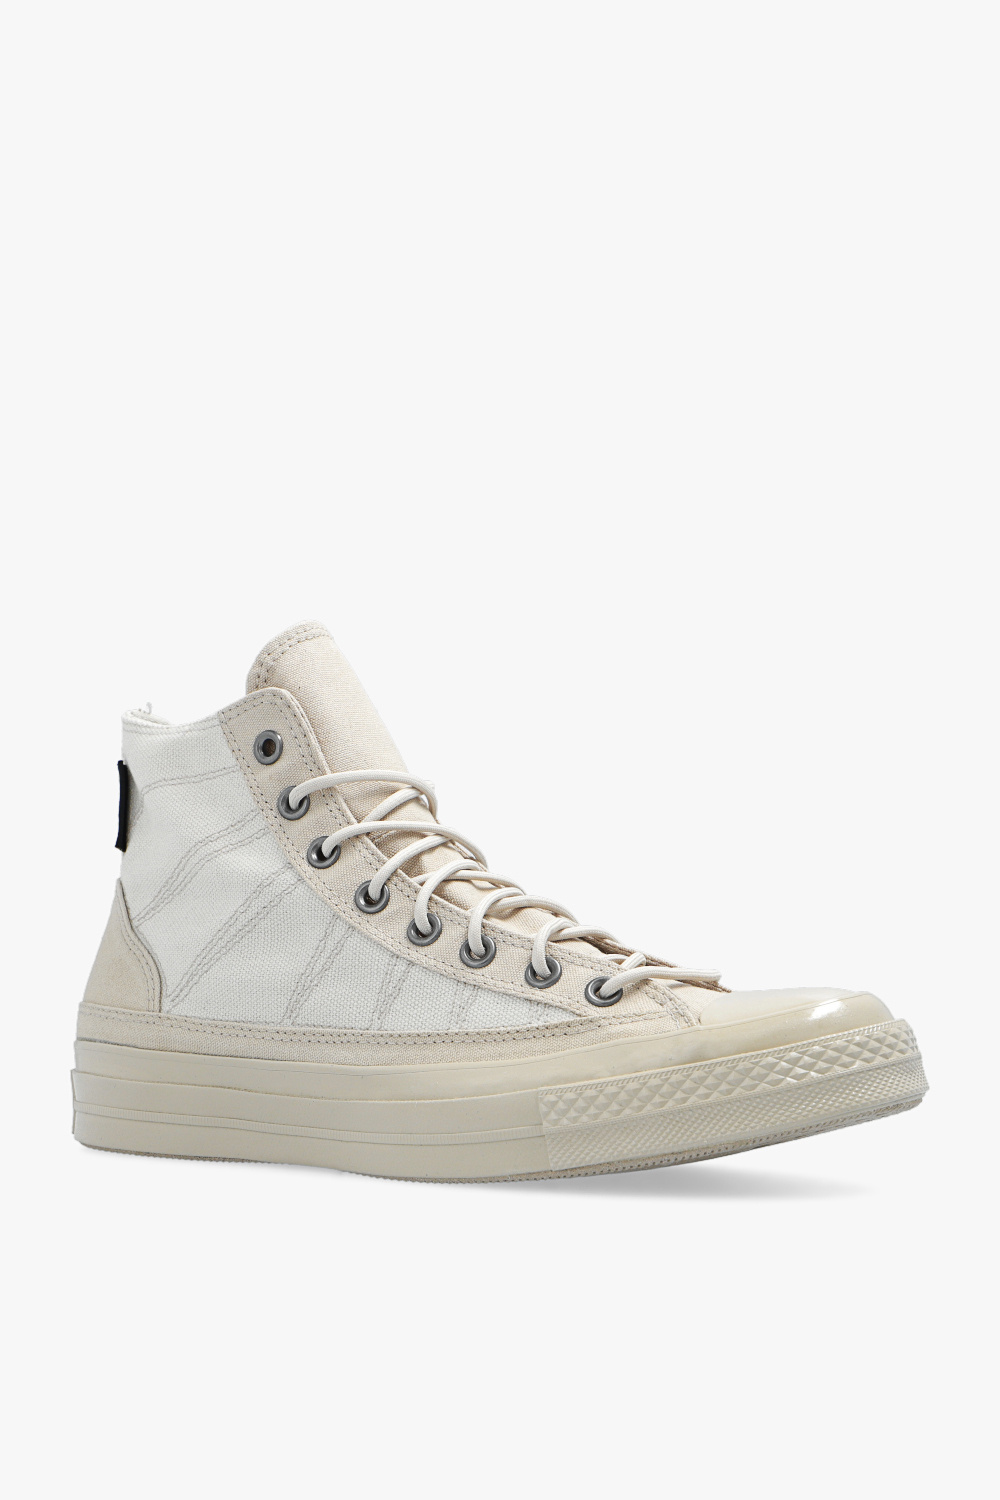 converse short ‘Chuck 70’ high-top sneakers